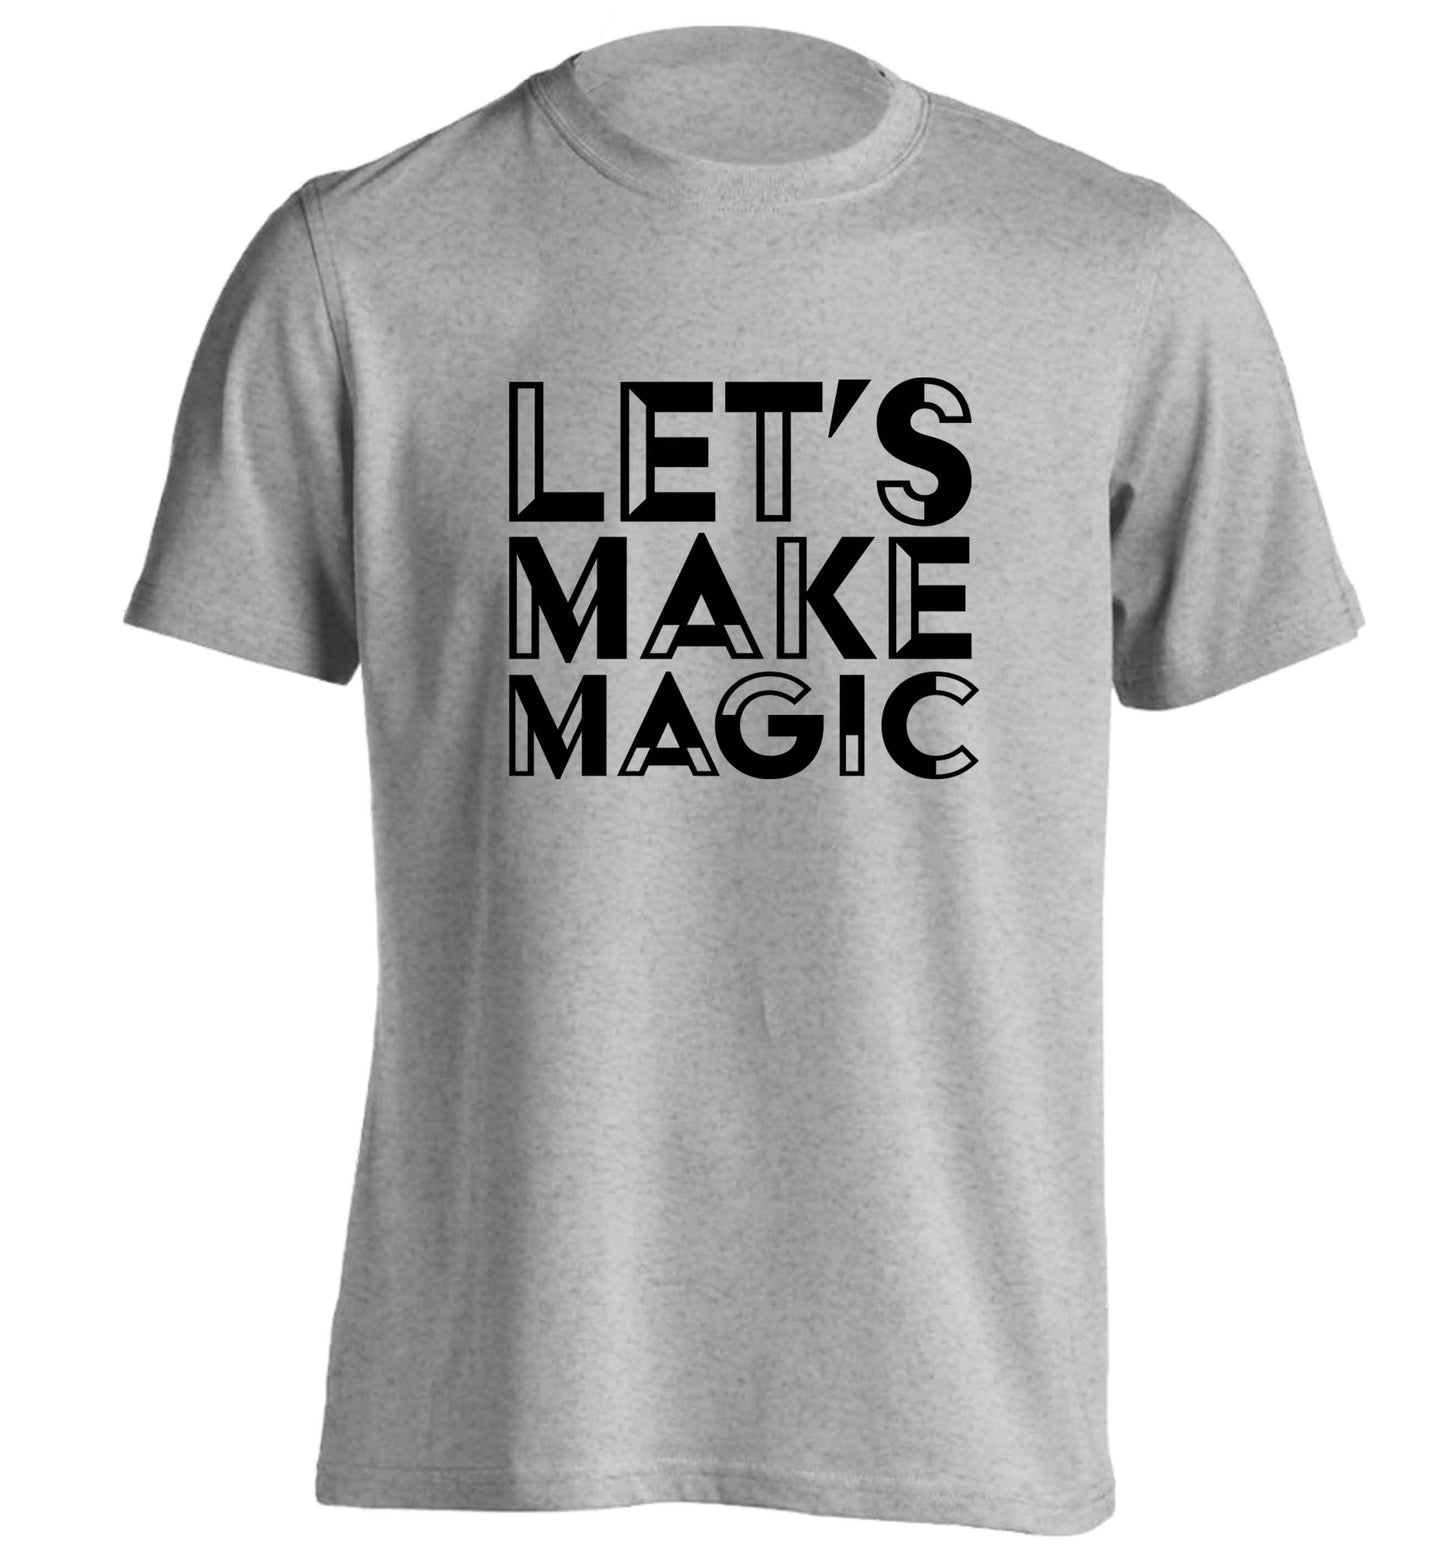 Let's make magic adults unisex grey Tshirt 2XL